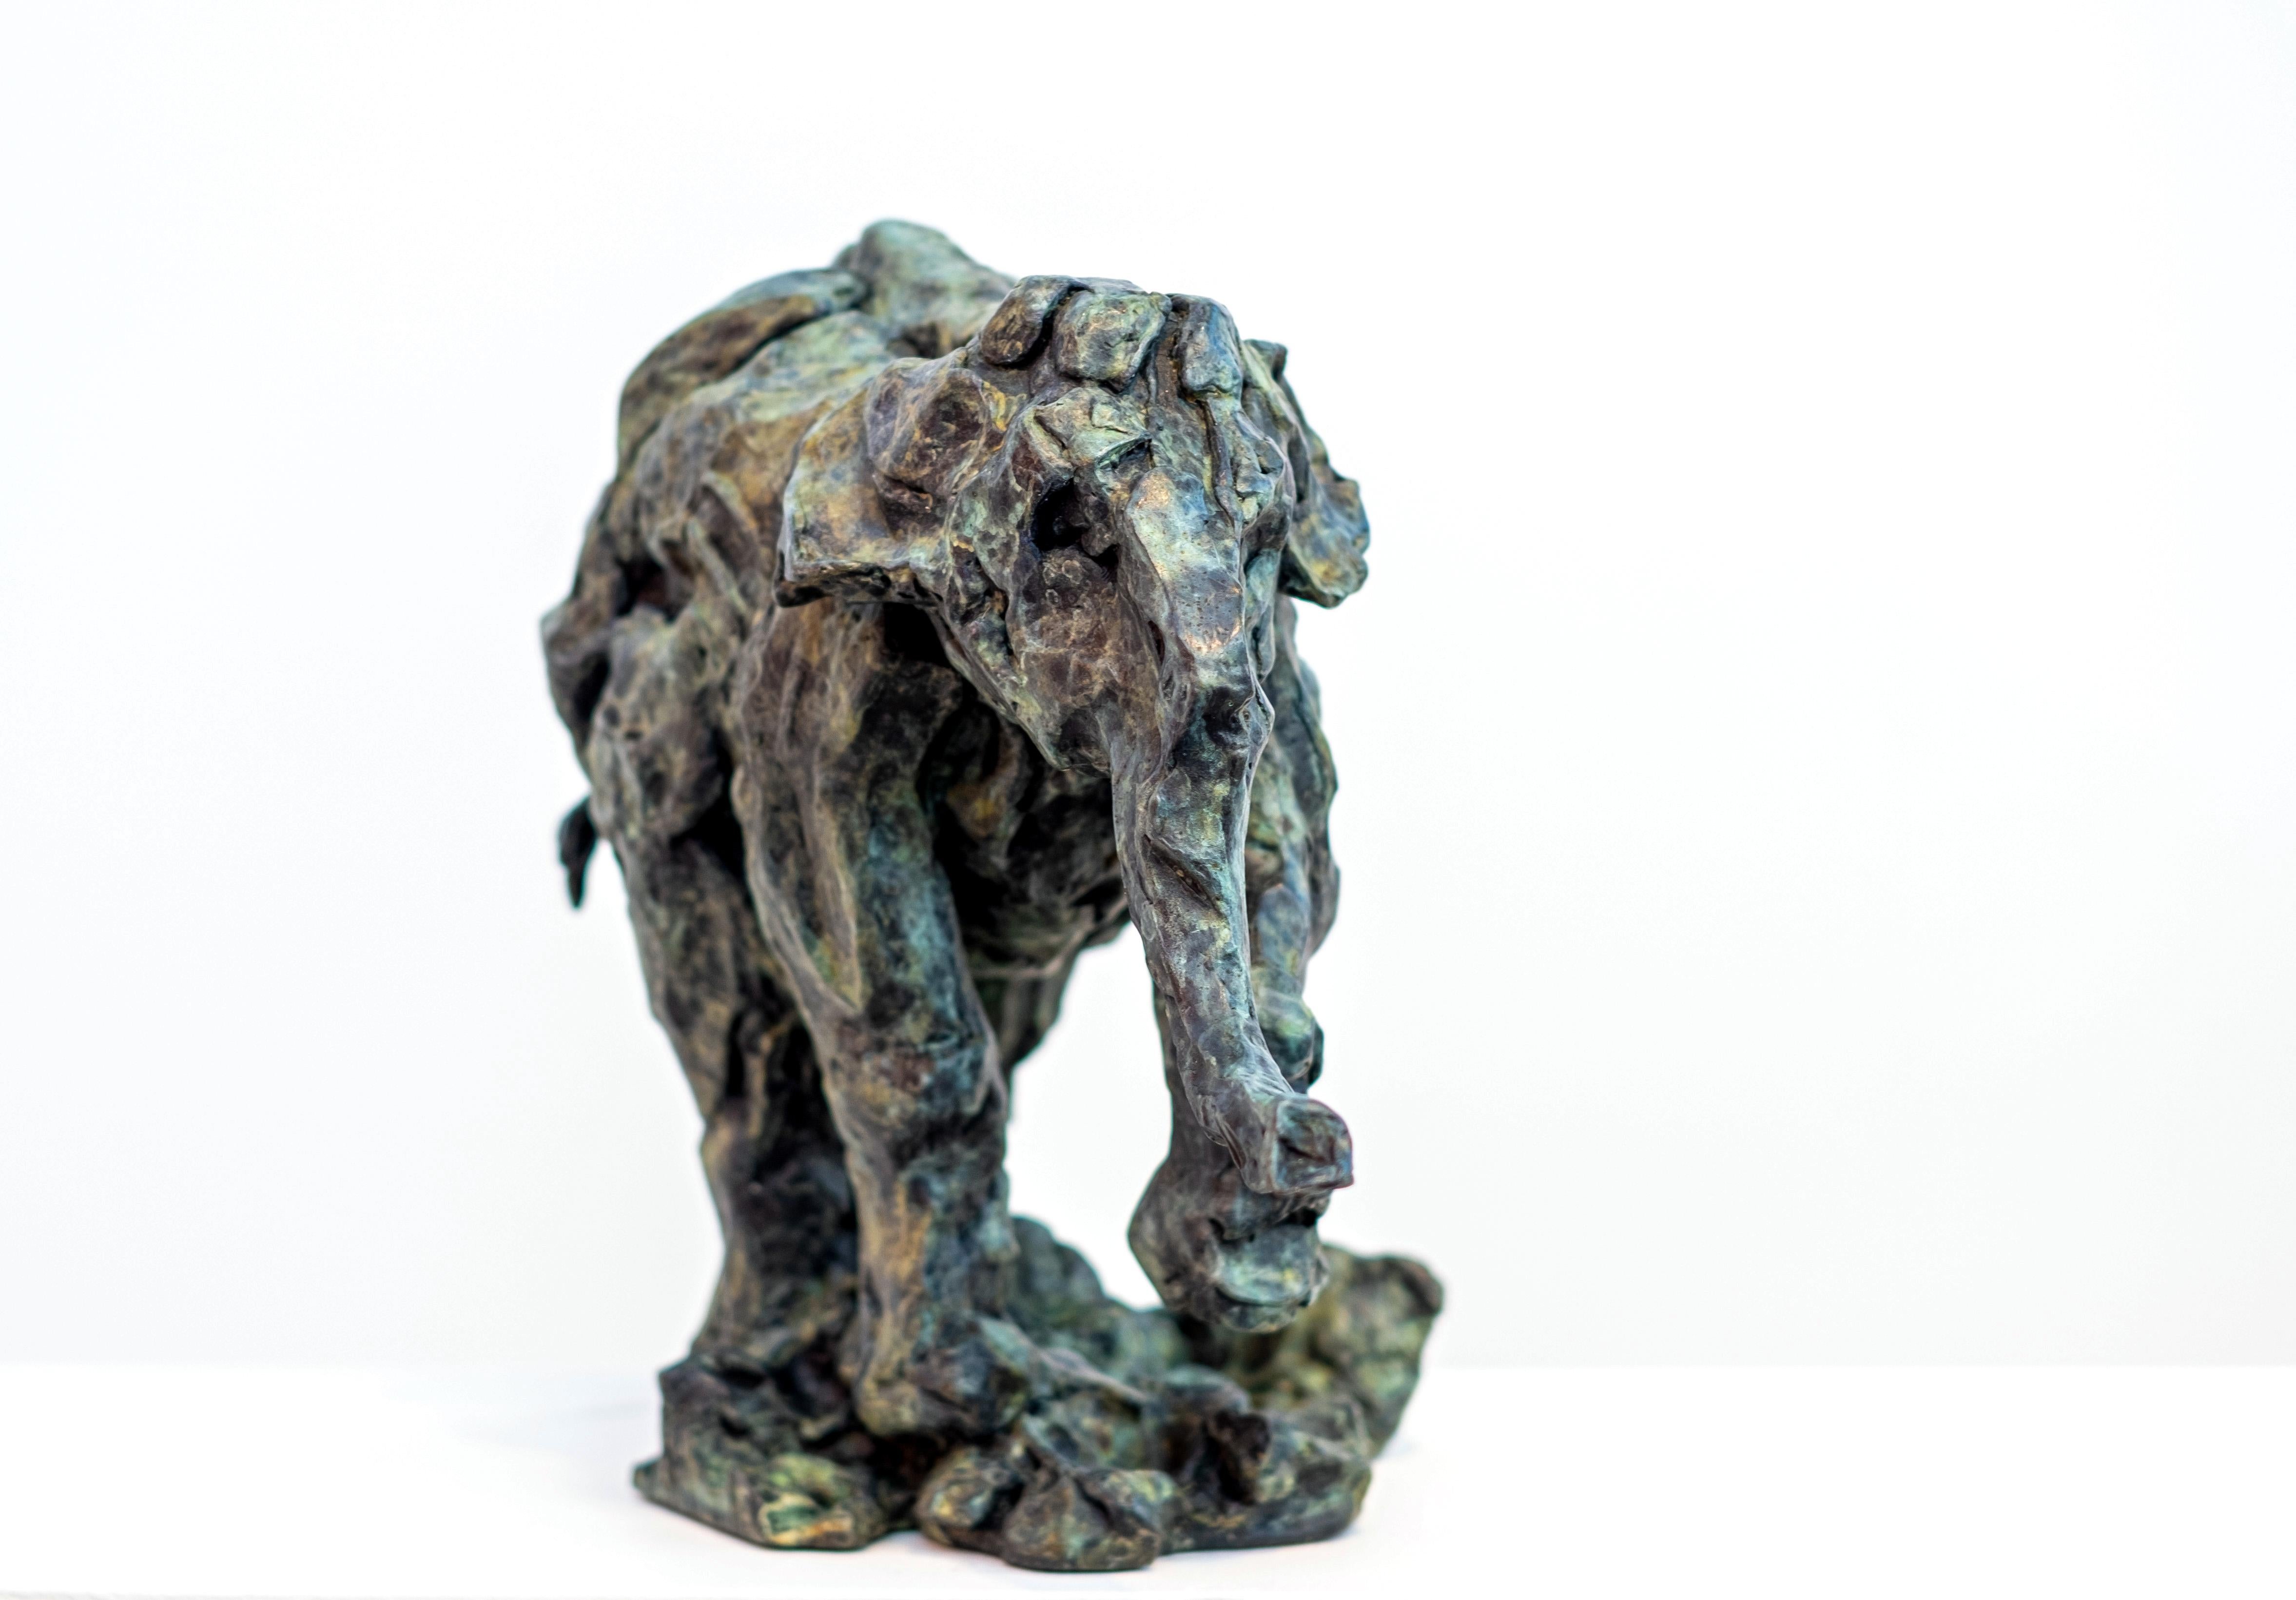  Elephant Dream - chasing tigers 3/8 - bronze table-top sculpture - Contemporary Sculpture by Richard Tosczak